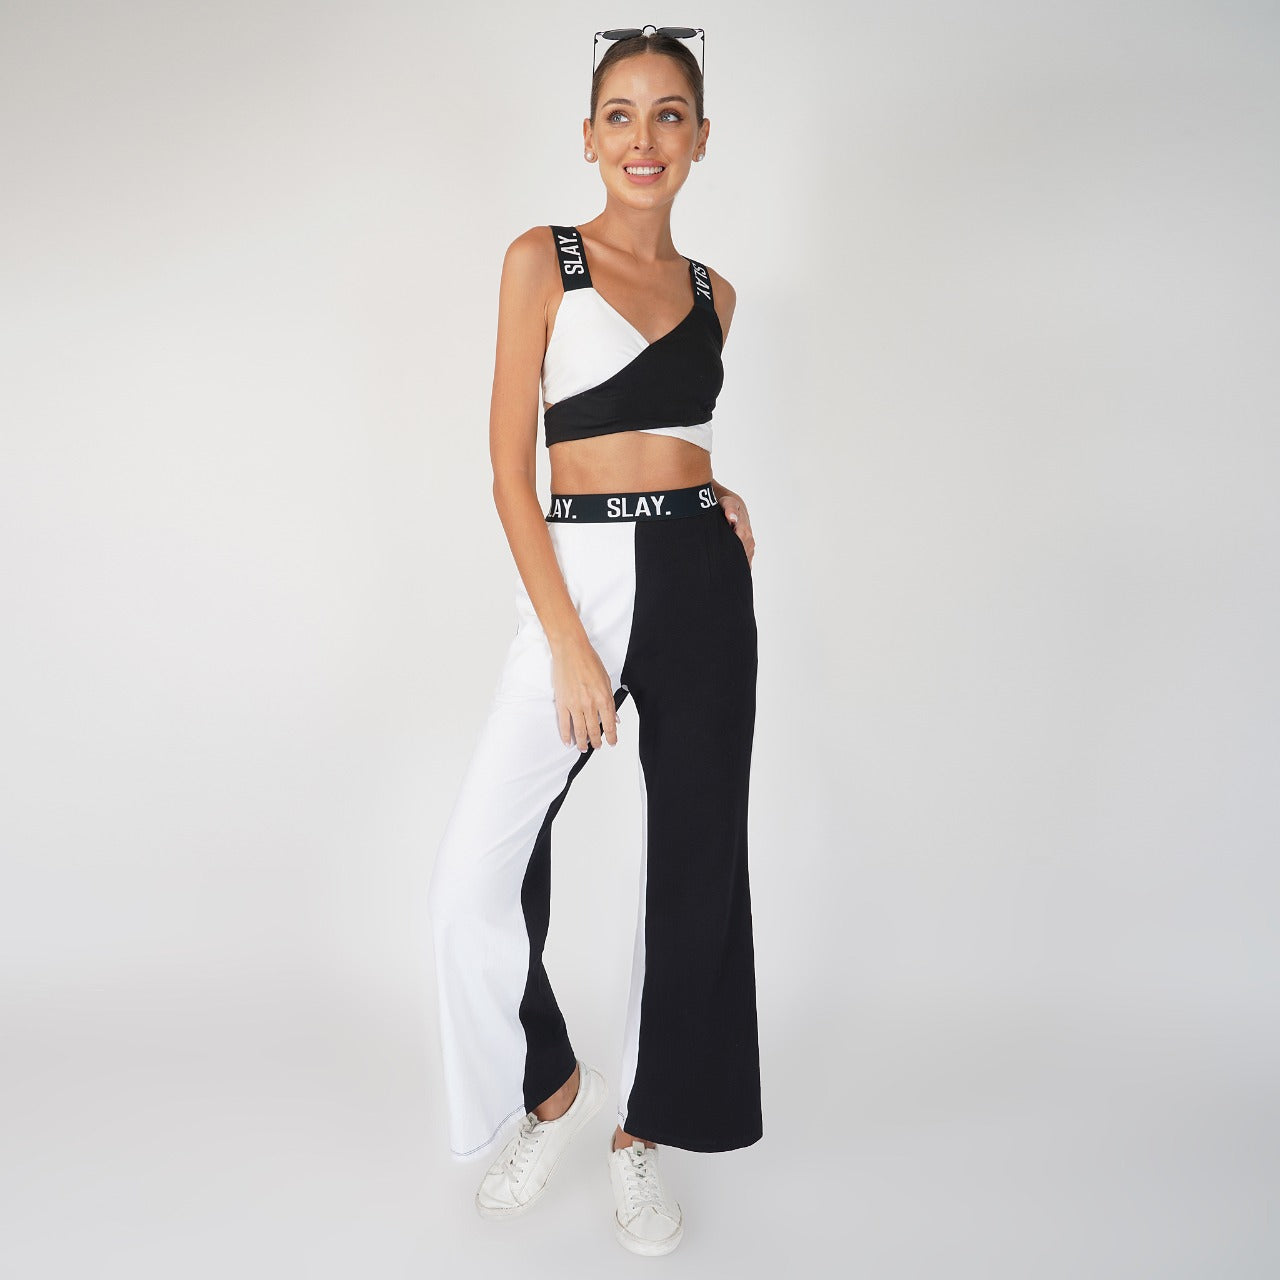 SLAY. Sport Women's Black White Colorblock Crop Top & Pants Co-ord Set